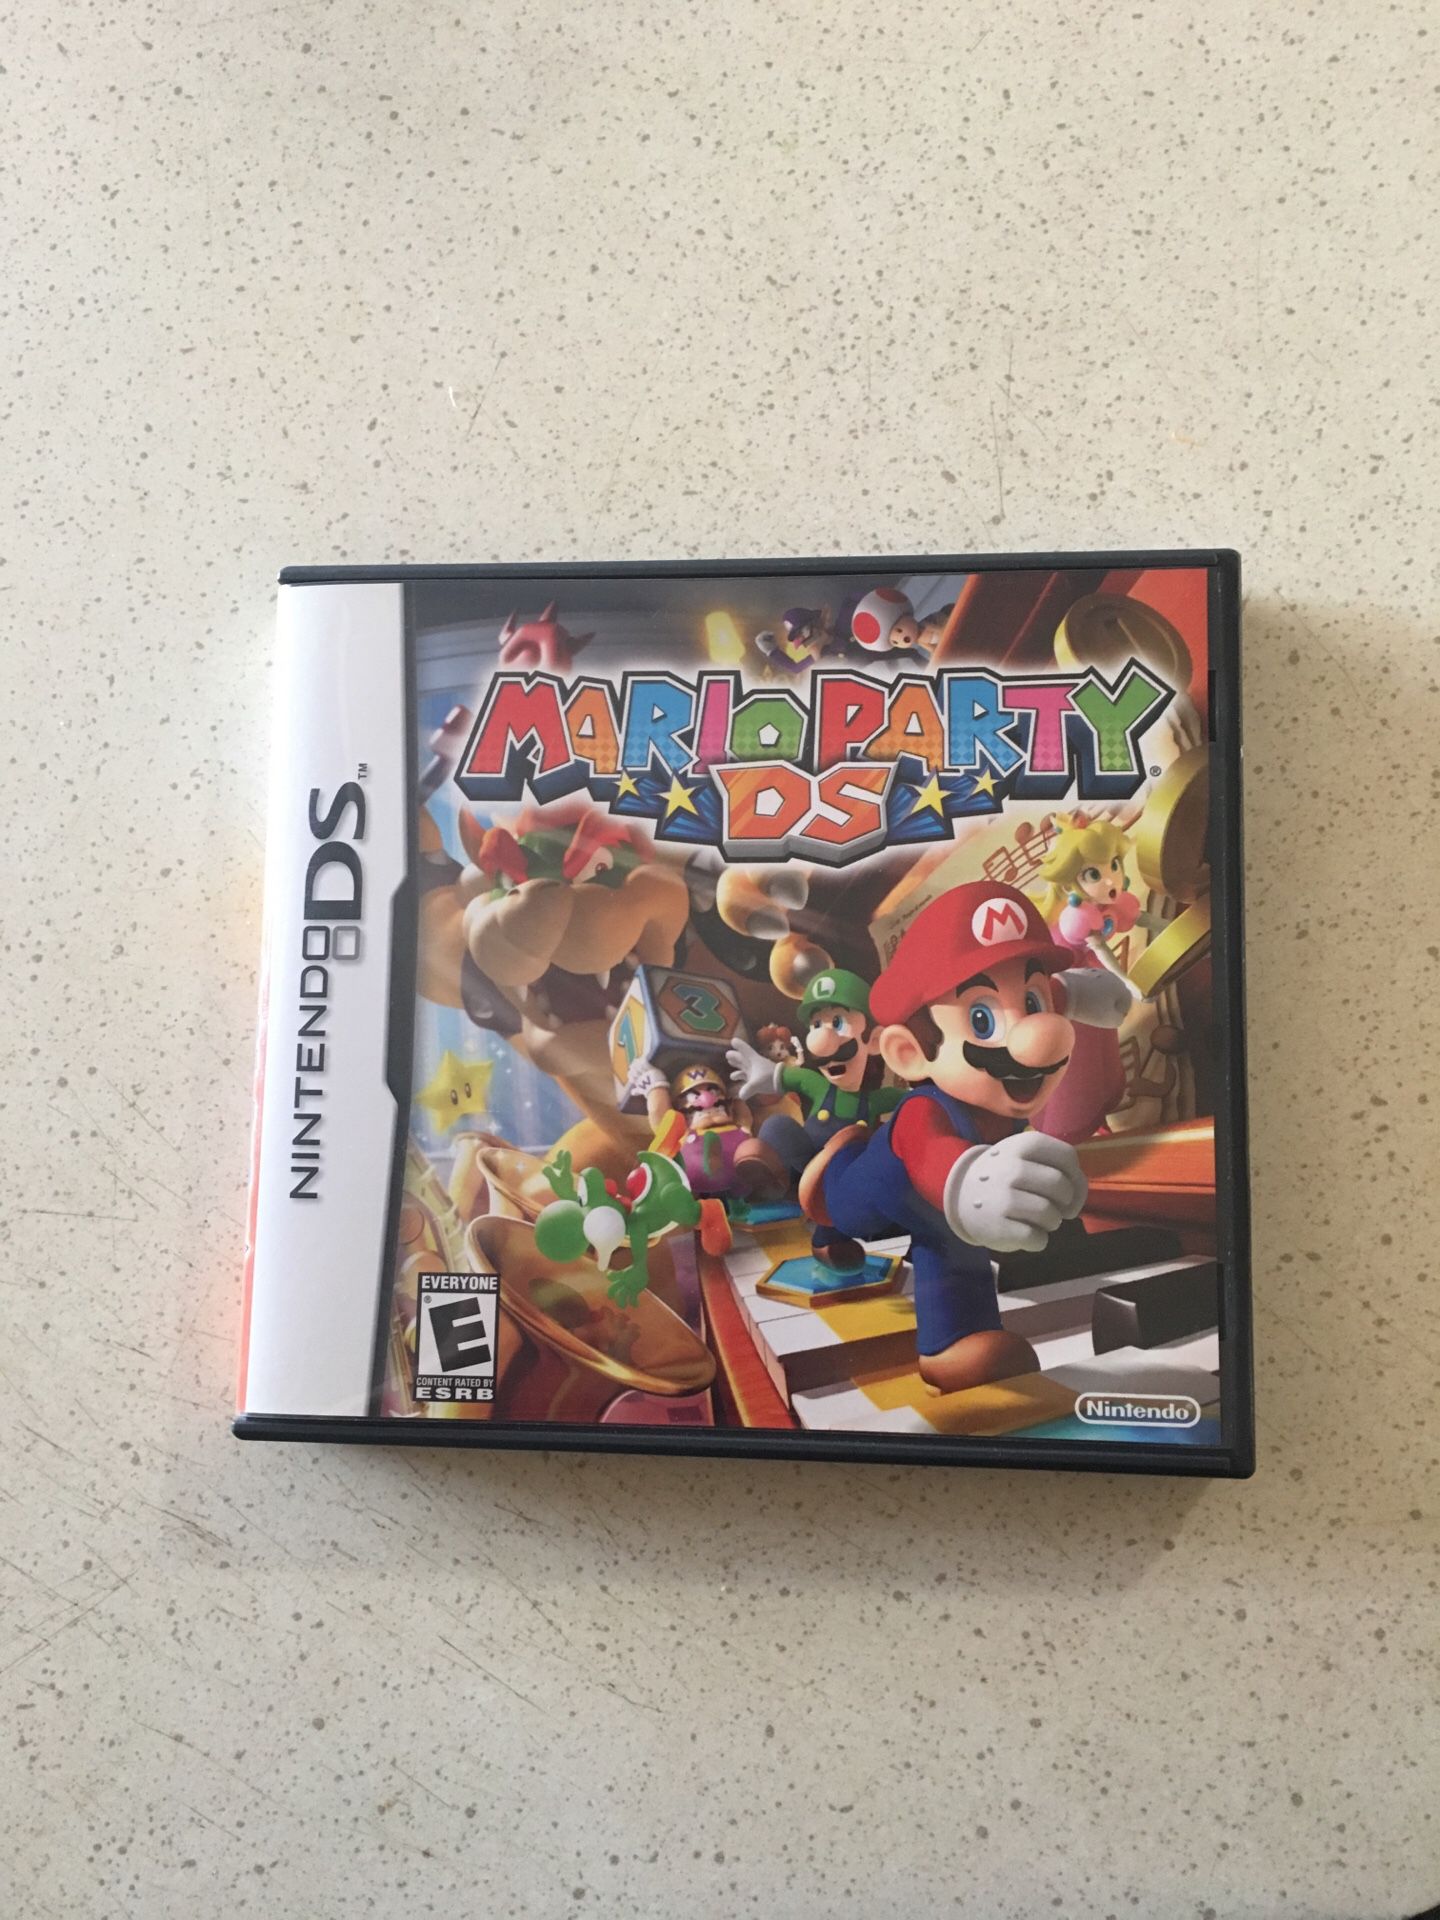 DS Nintendo Mario’s party game